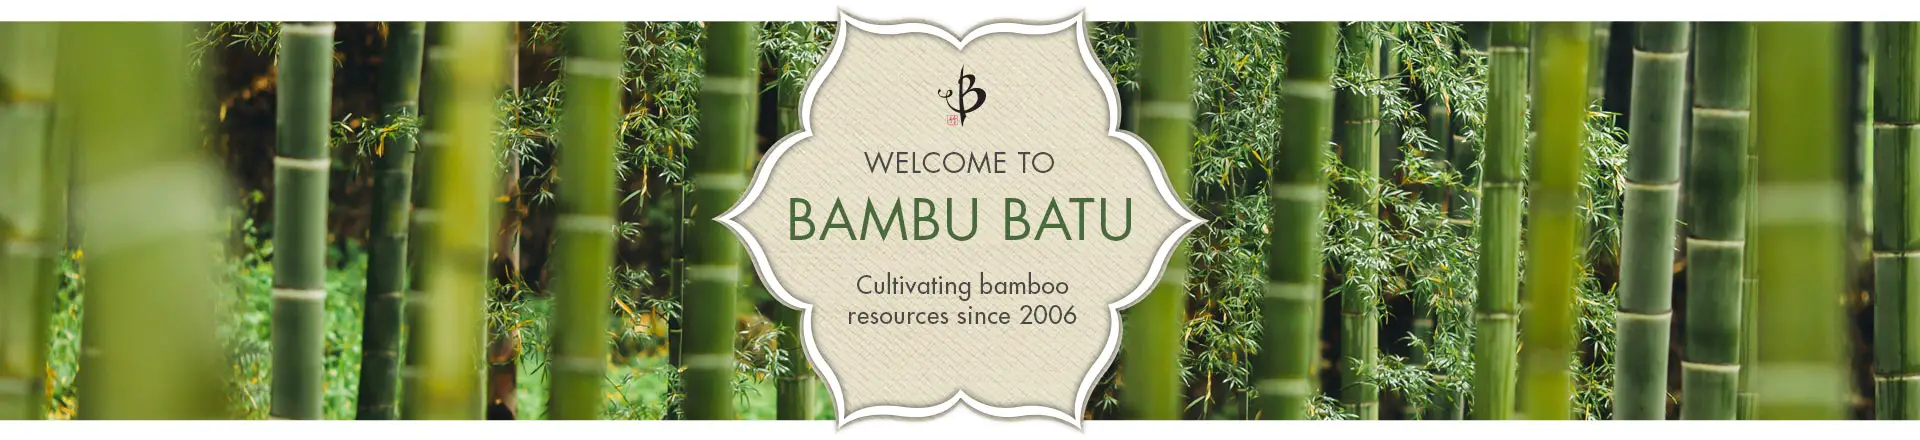 Bambu welcome header